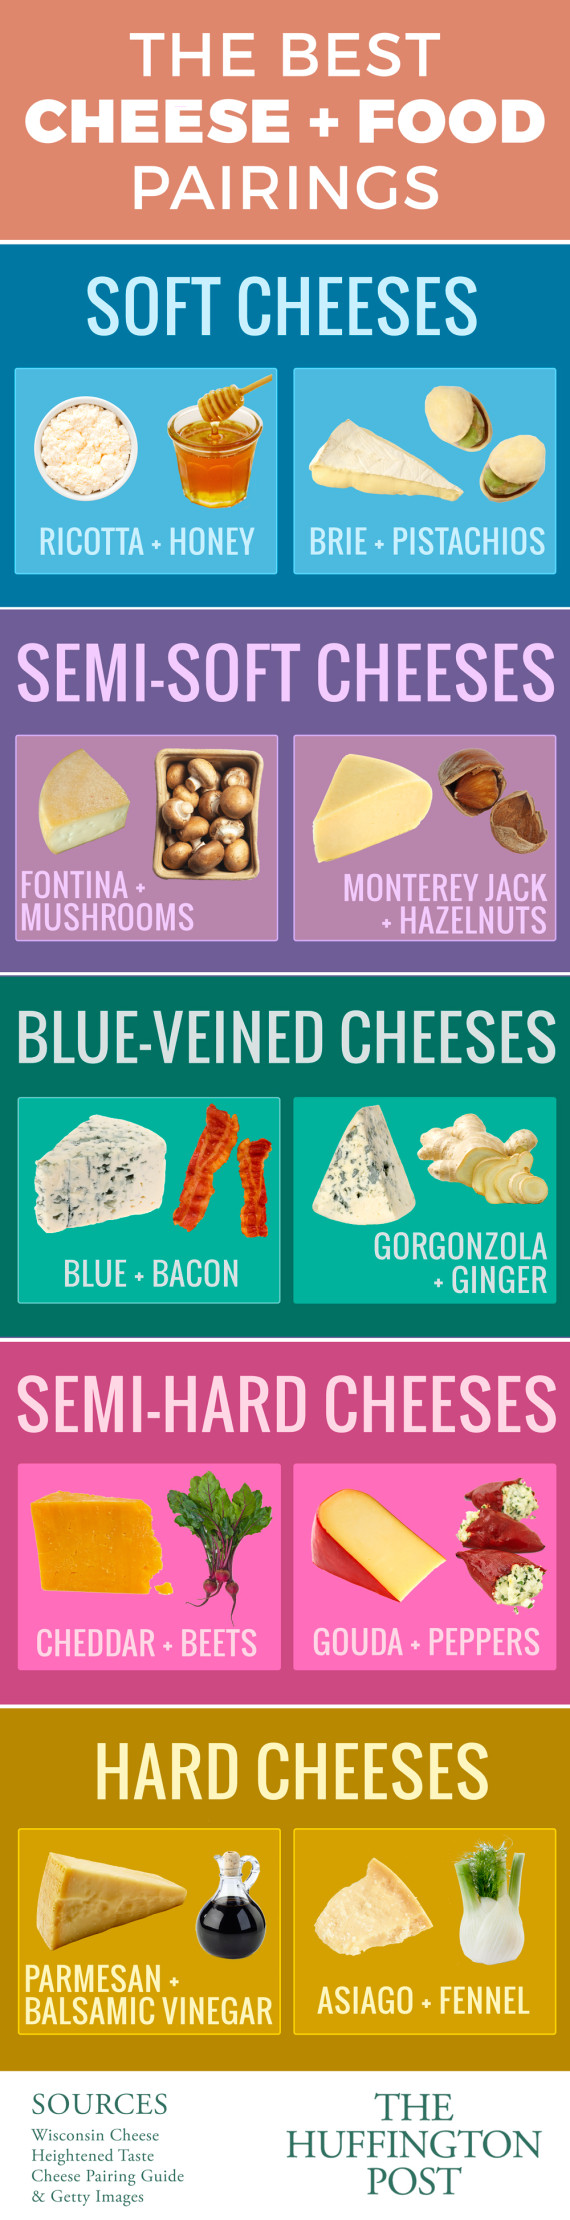 Wine And Cheese Matching Chart